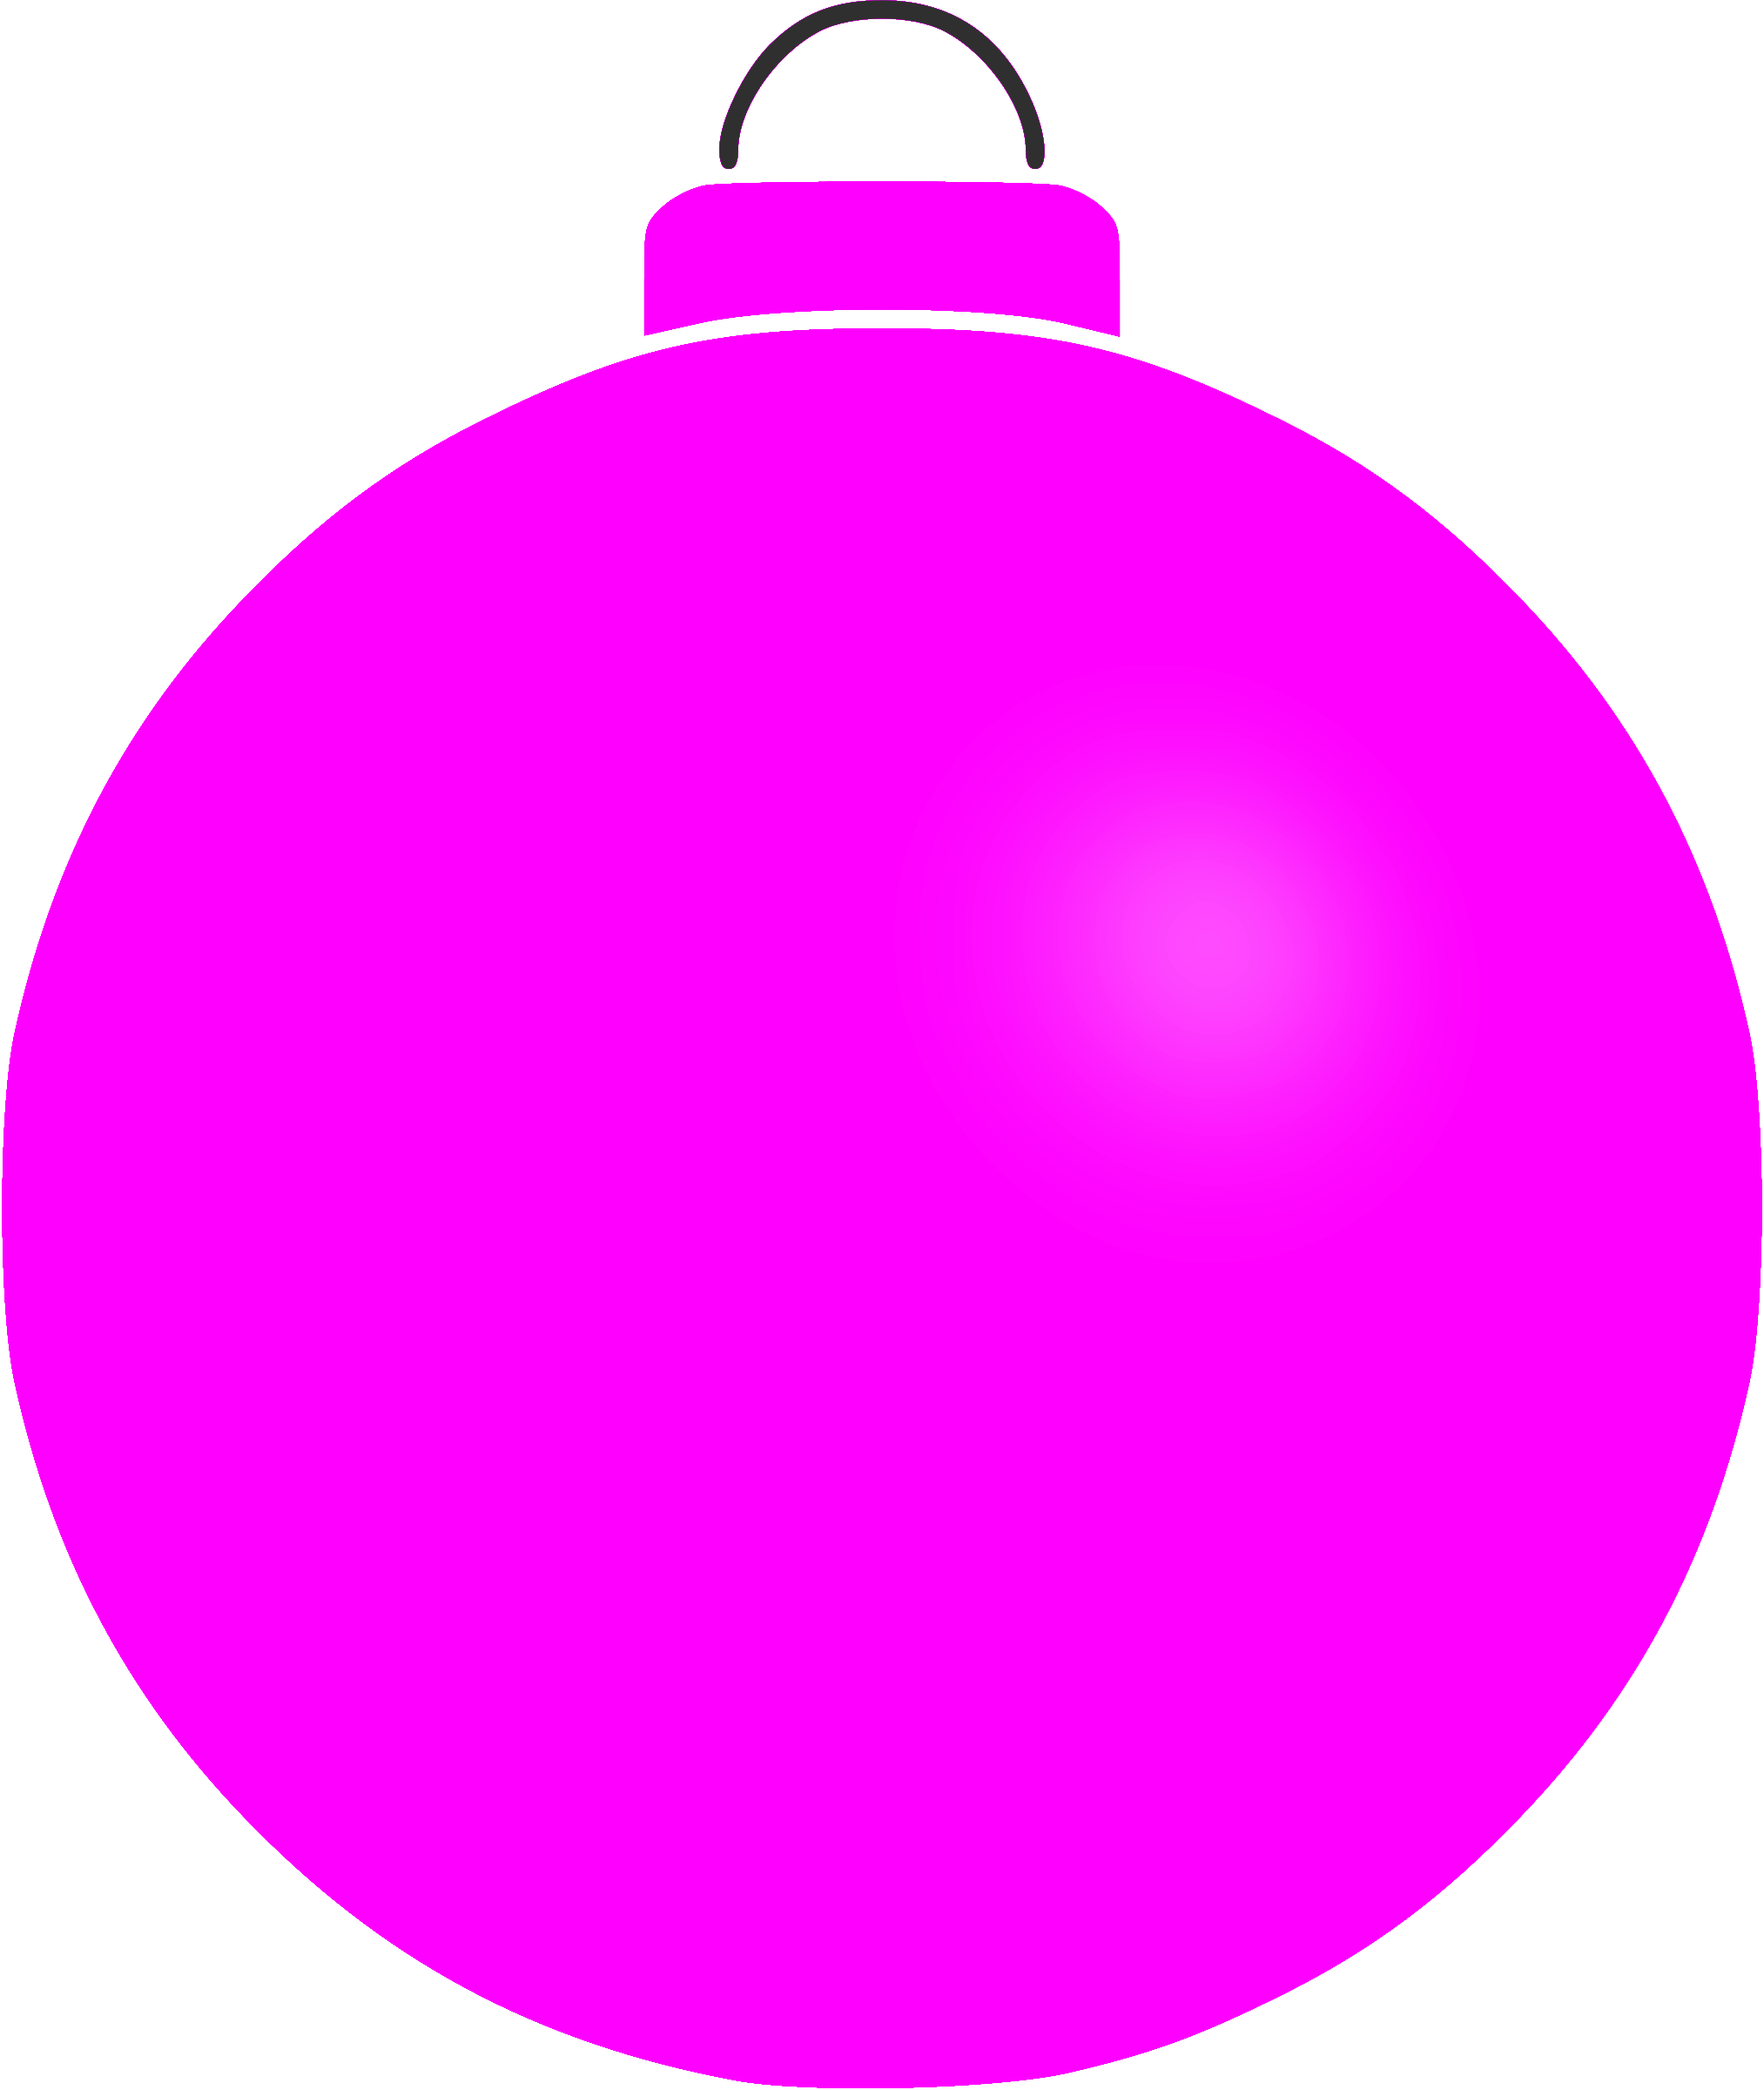 Plain bauble big image. Ornaments clipart pink ornament